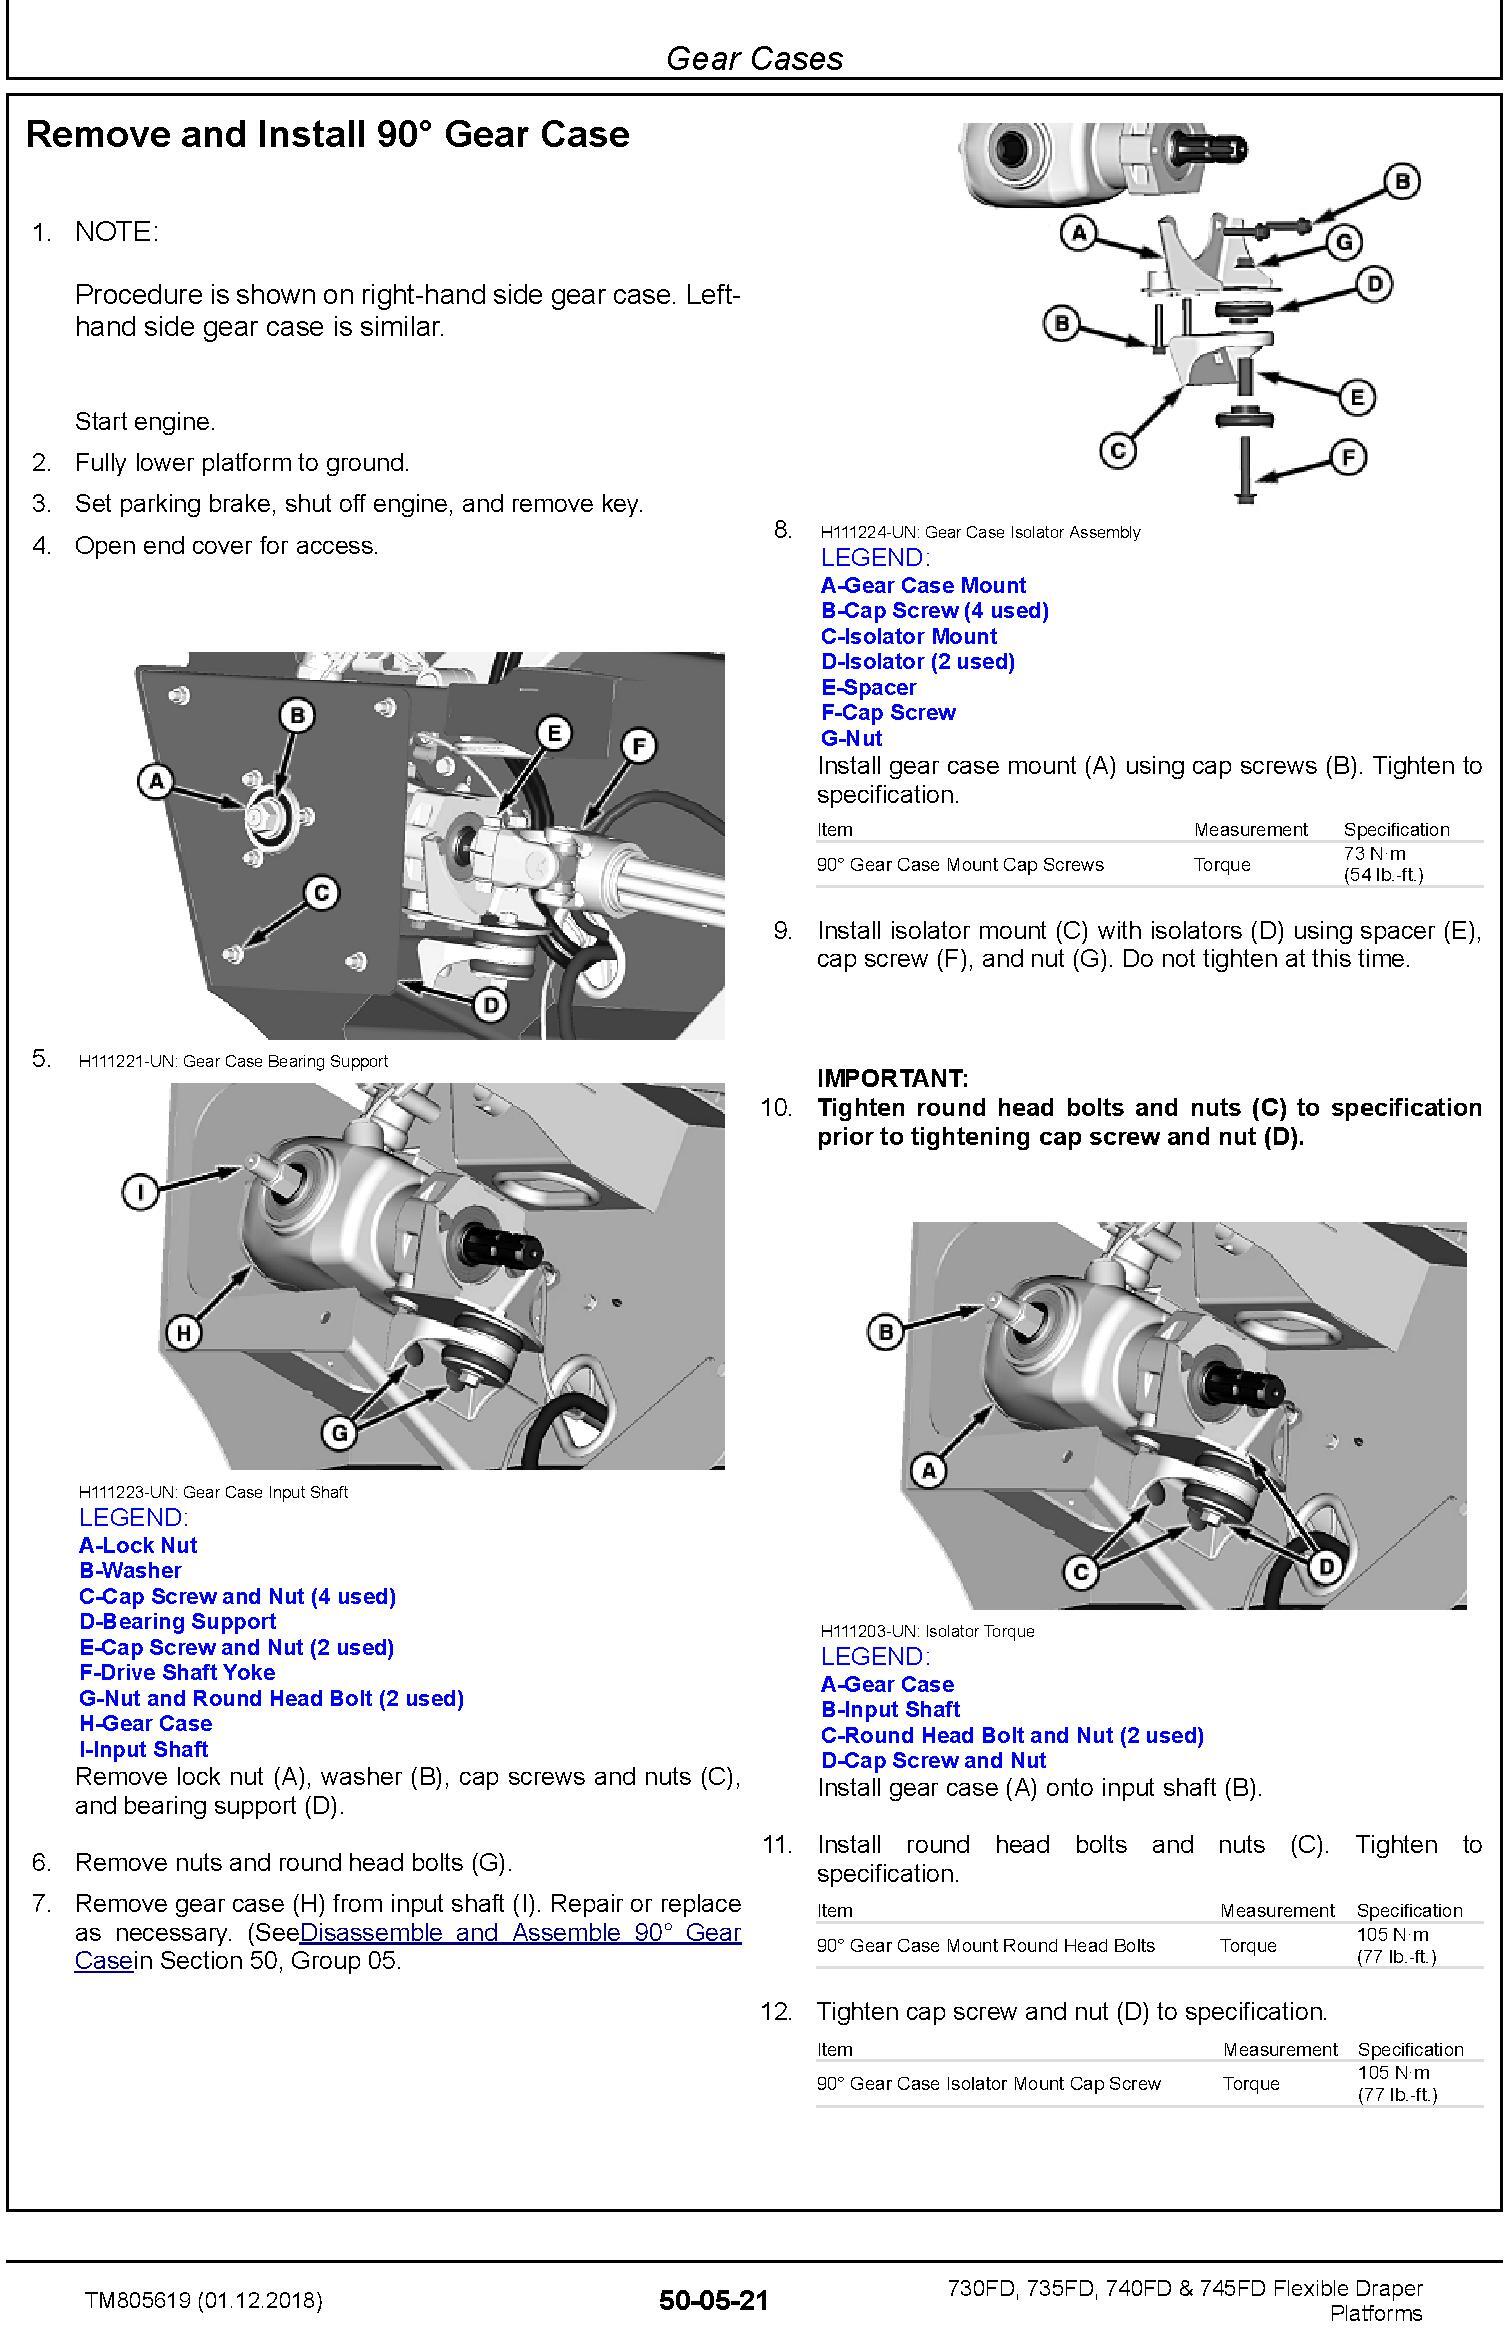 John Deere 730FD, 735FD, 740FD & 745FD Flexible Draper Platforms Repair Technical Manual (TM805619) - 2